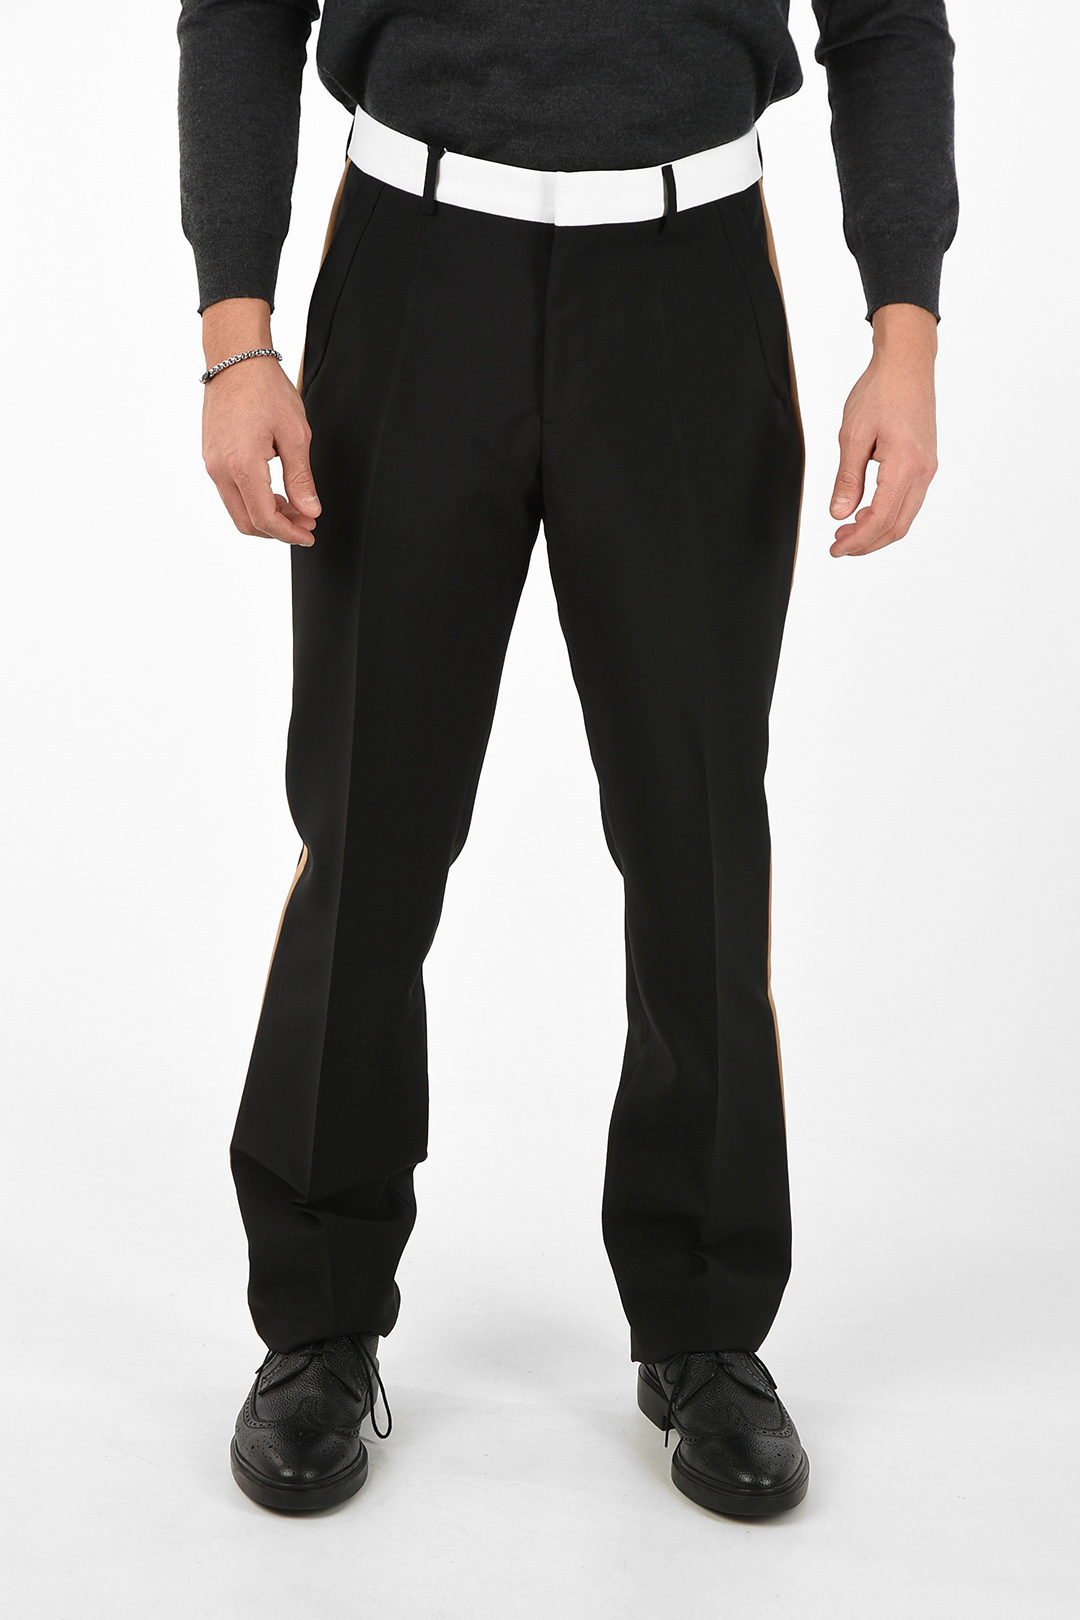 BURBERRY Size 36 Black Embellishment Mohair Wool Tuxedo Dress Pants  Sui  Generis Designer Consignment